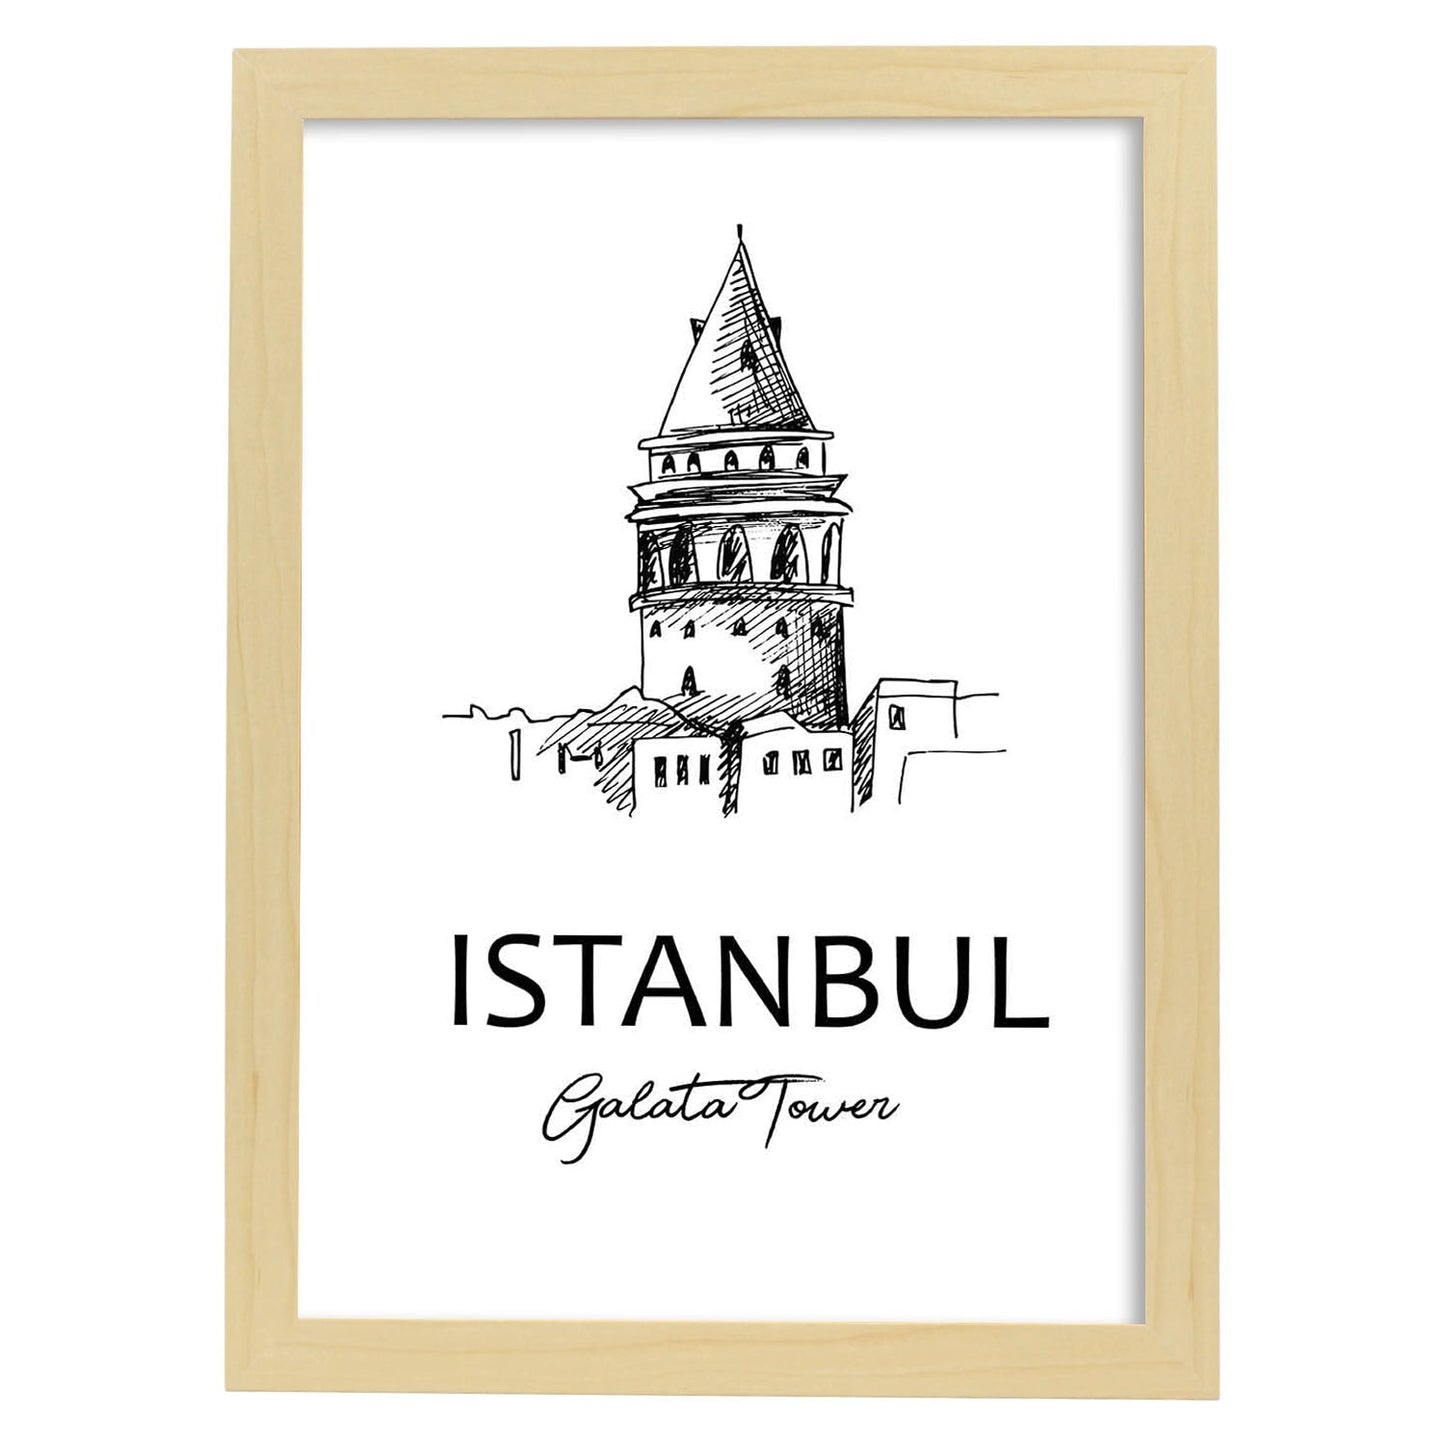 Poster de Estambul - Torre galata. Láminas con monumentos de ciudades.-Artwork-Nacnic-A4-Marco Madera clara-Nacnic Estudio SL